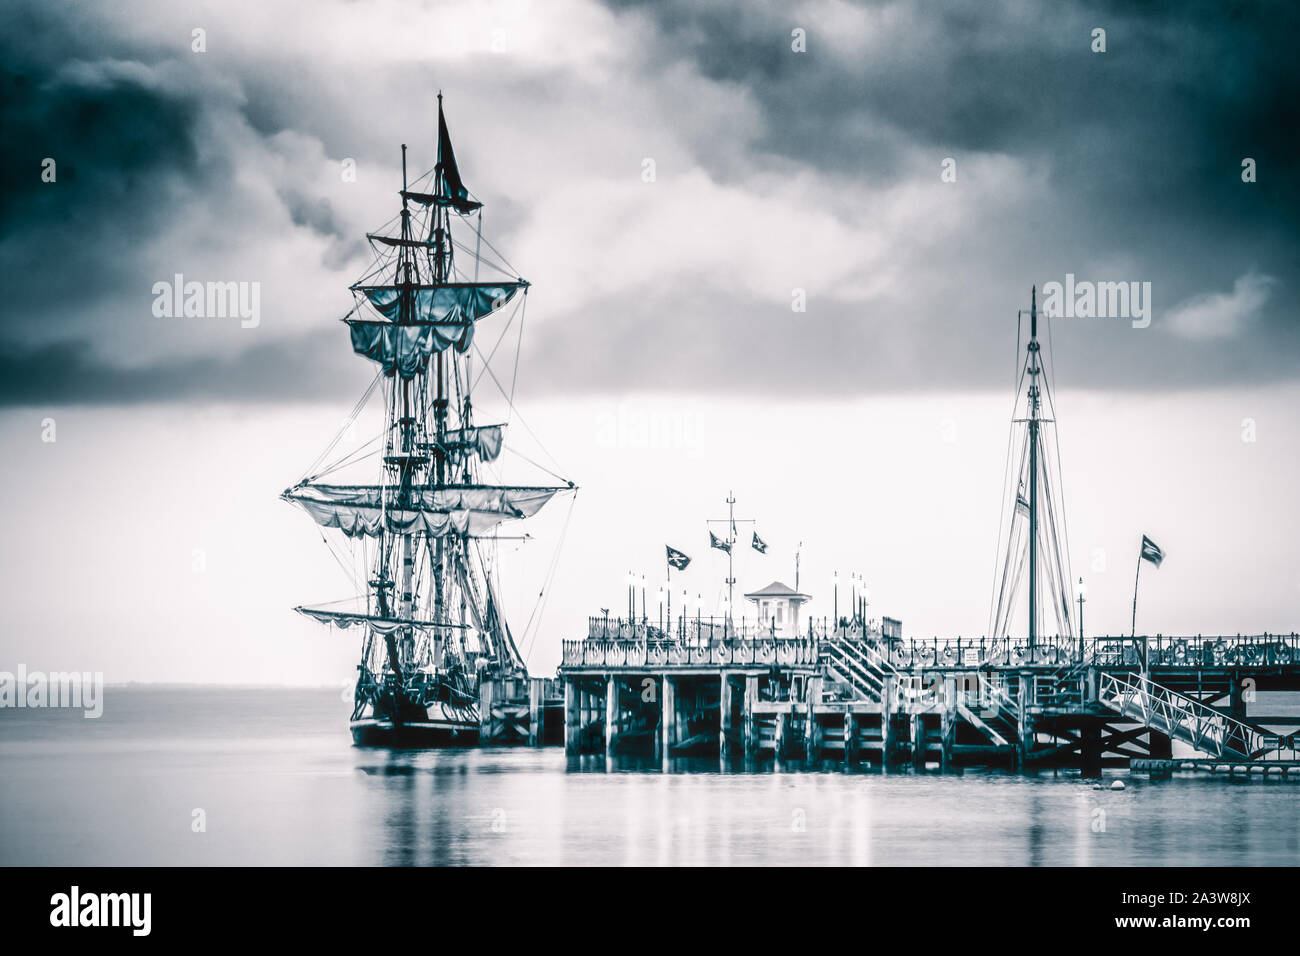 Pirate Ship, SHTANDART, moored at Swanage Pier, Swanage, Dorset Stock Photo